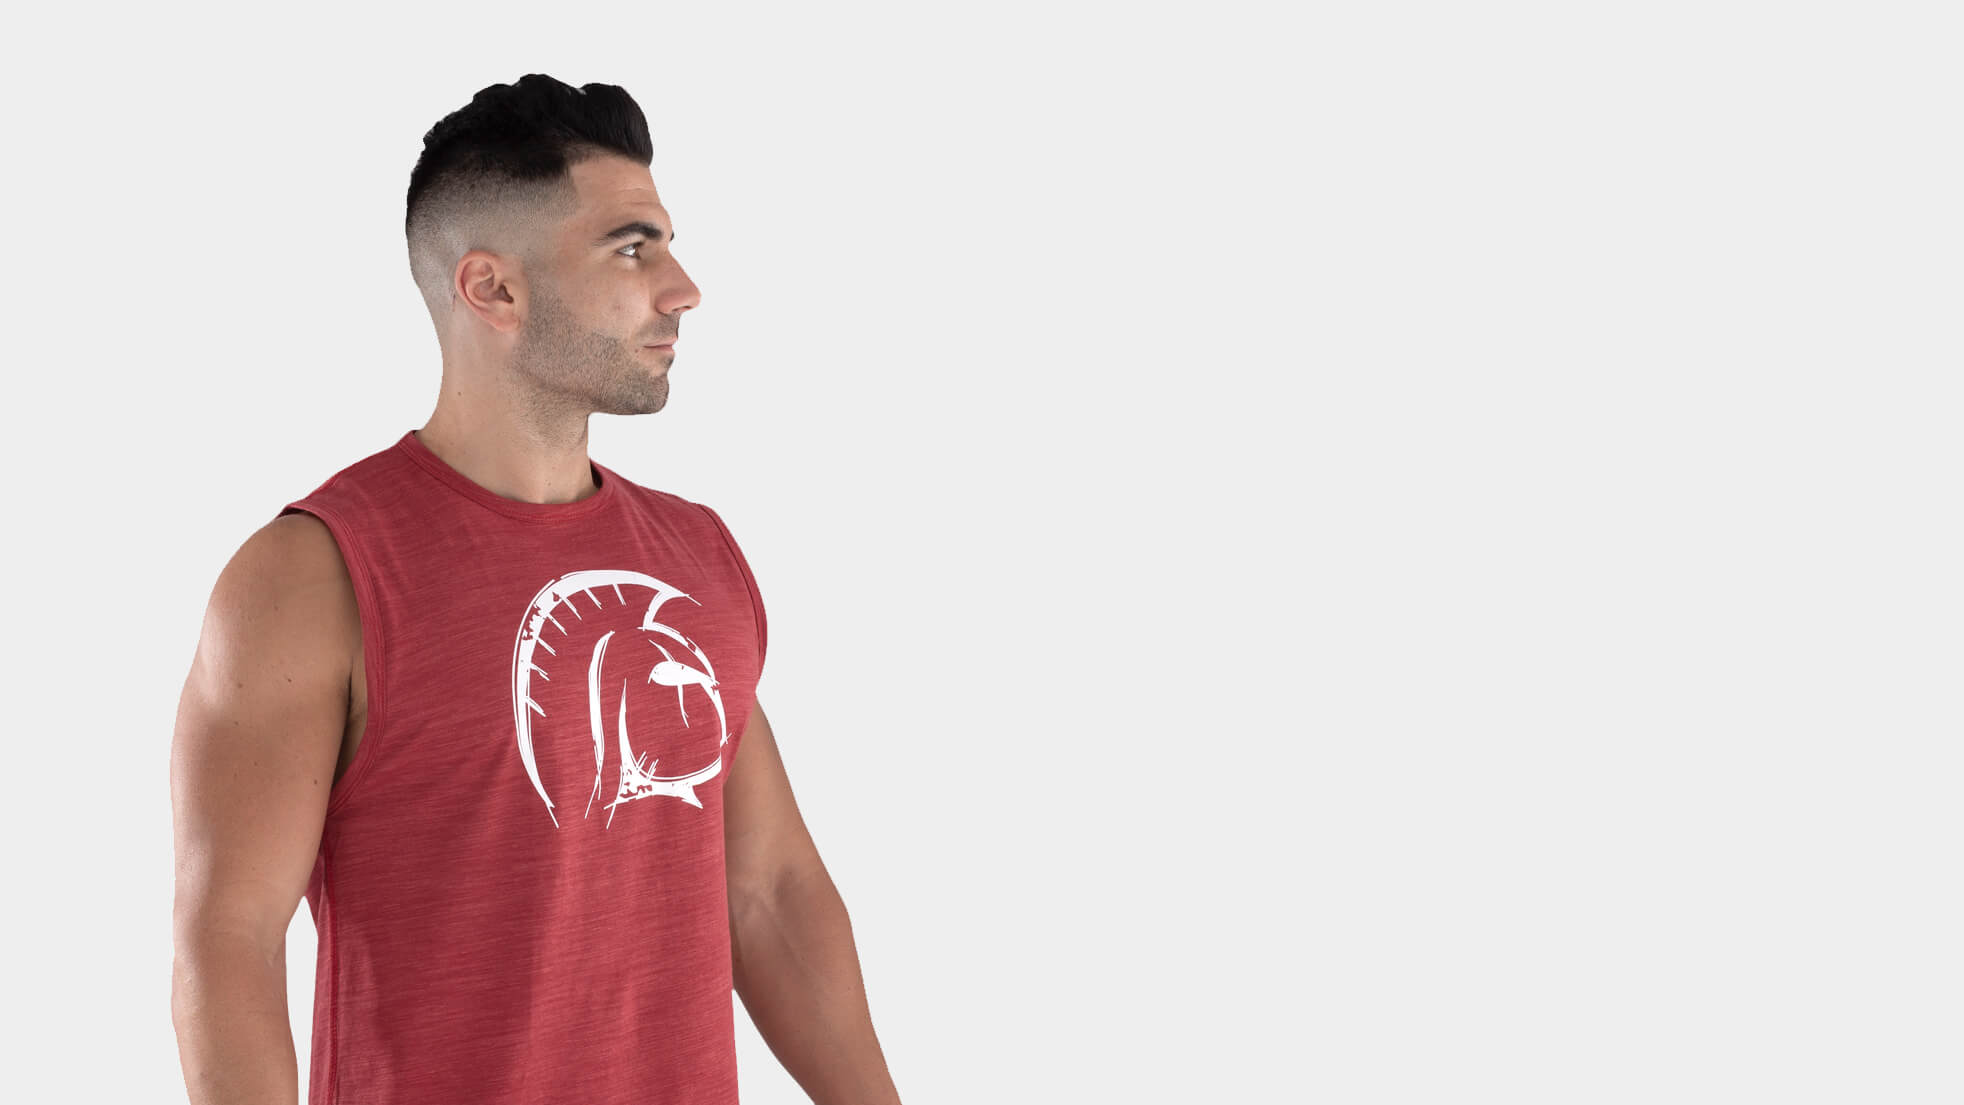 Camiseta sin mangas Ecoactive Hombre (COR3 Red)